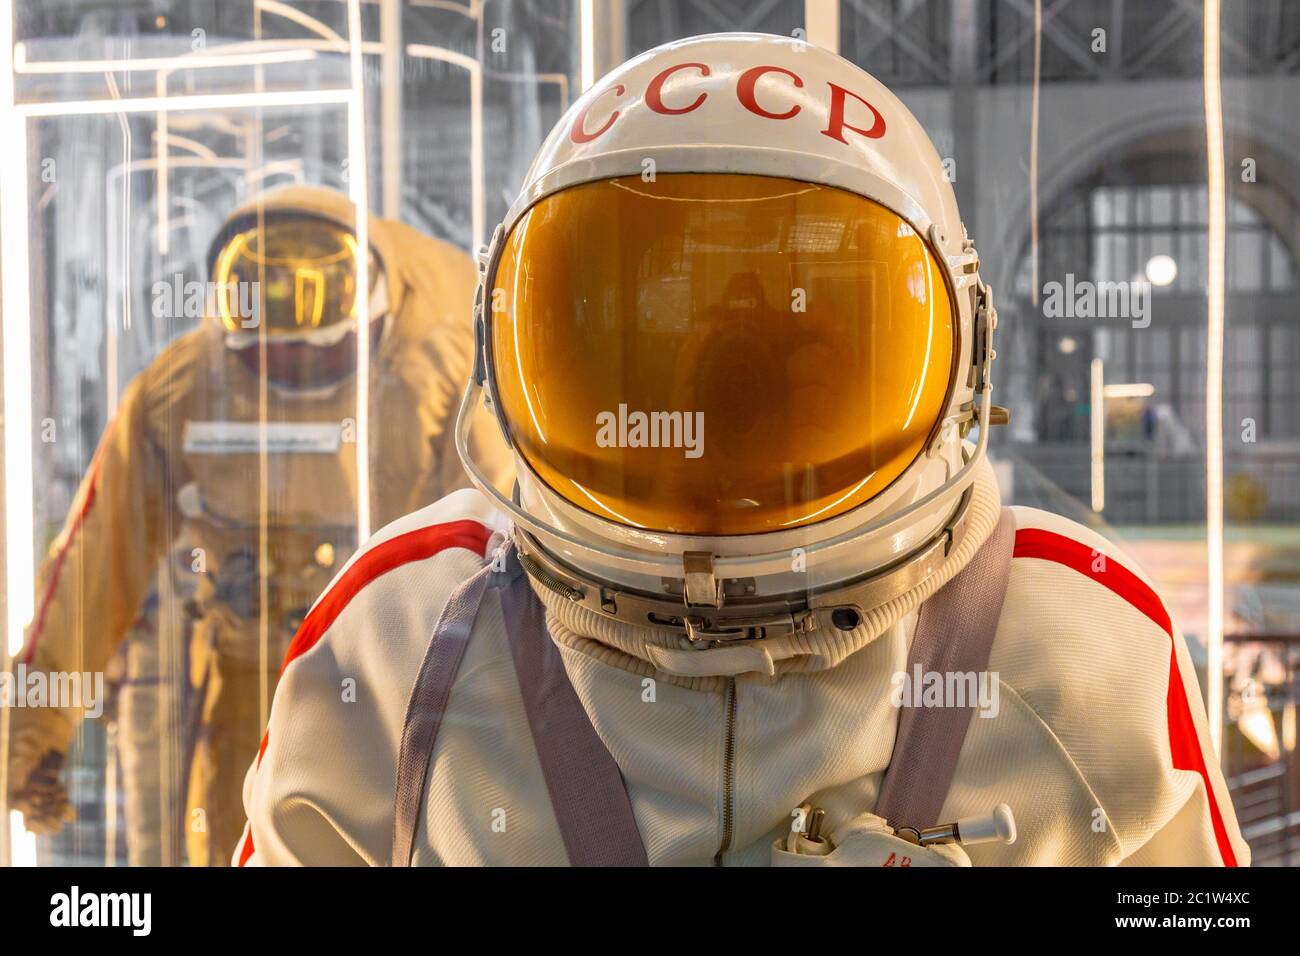 Maniquí de cosmonauta soviético o o traje de hombre espacial y casco, de cerca de stock - Alamy